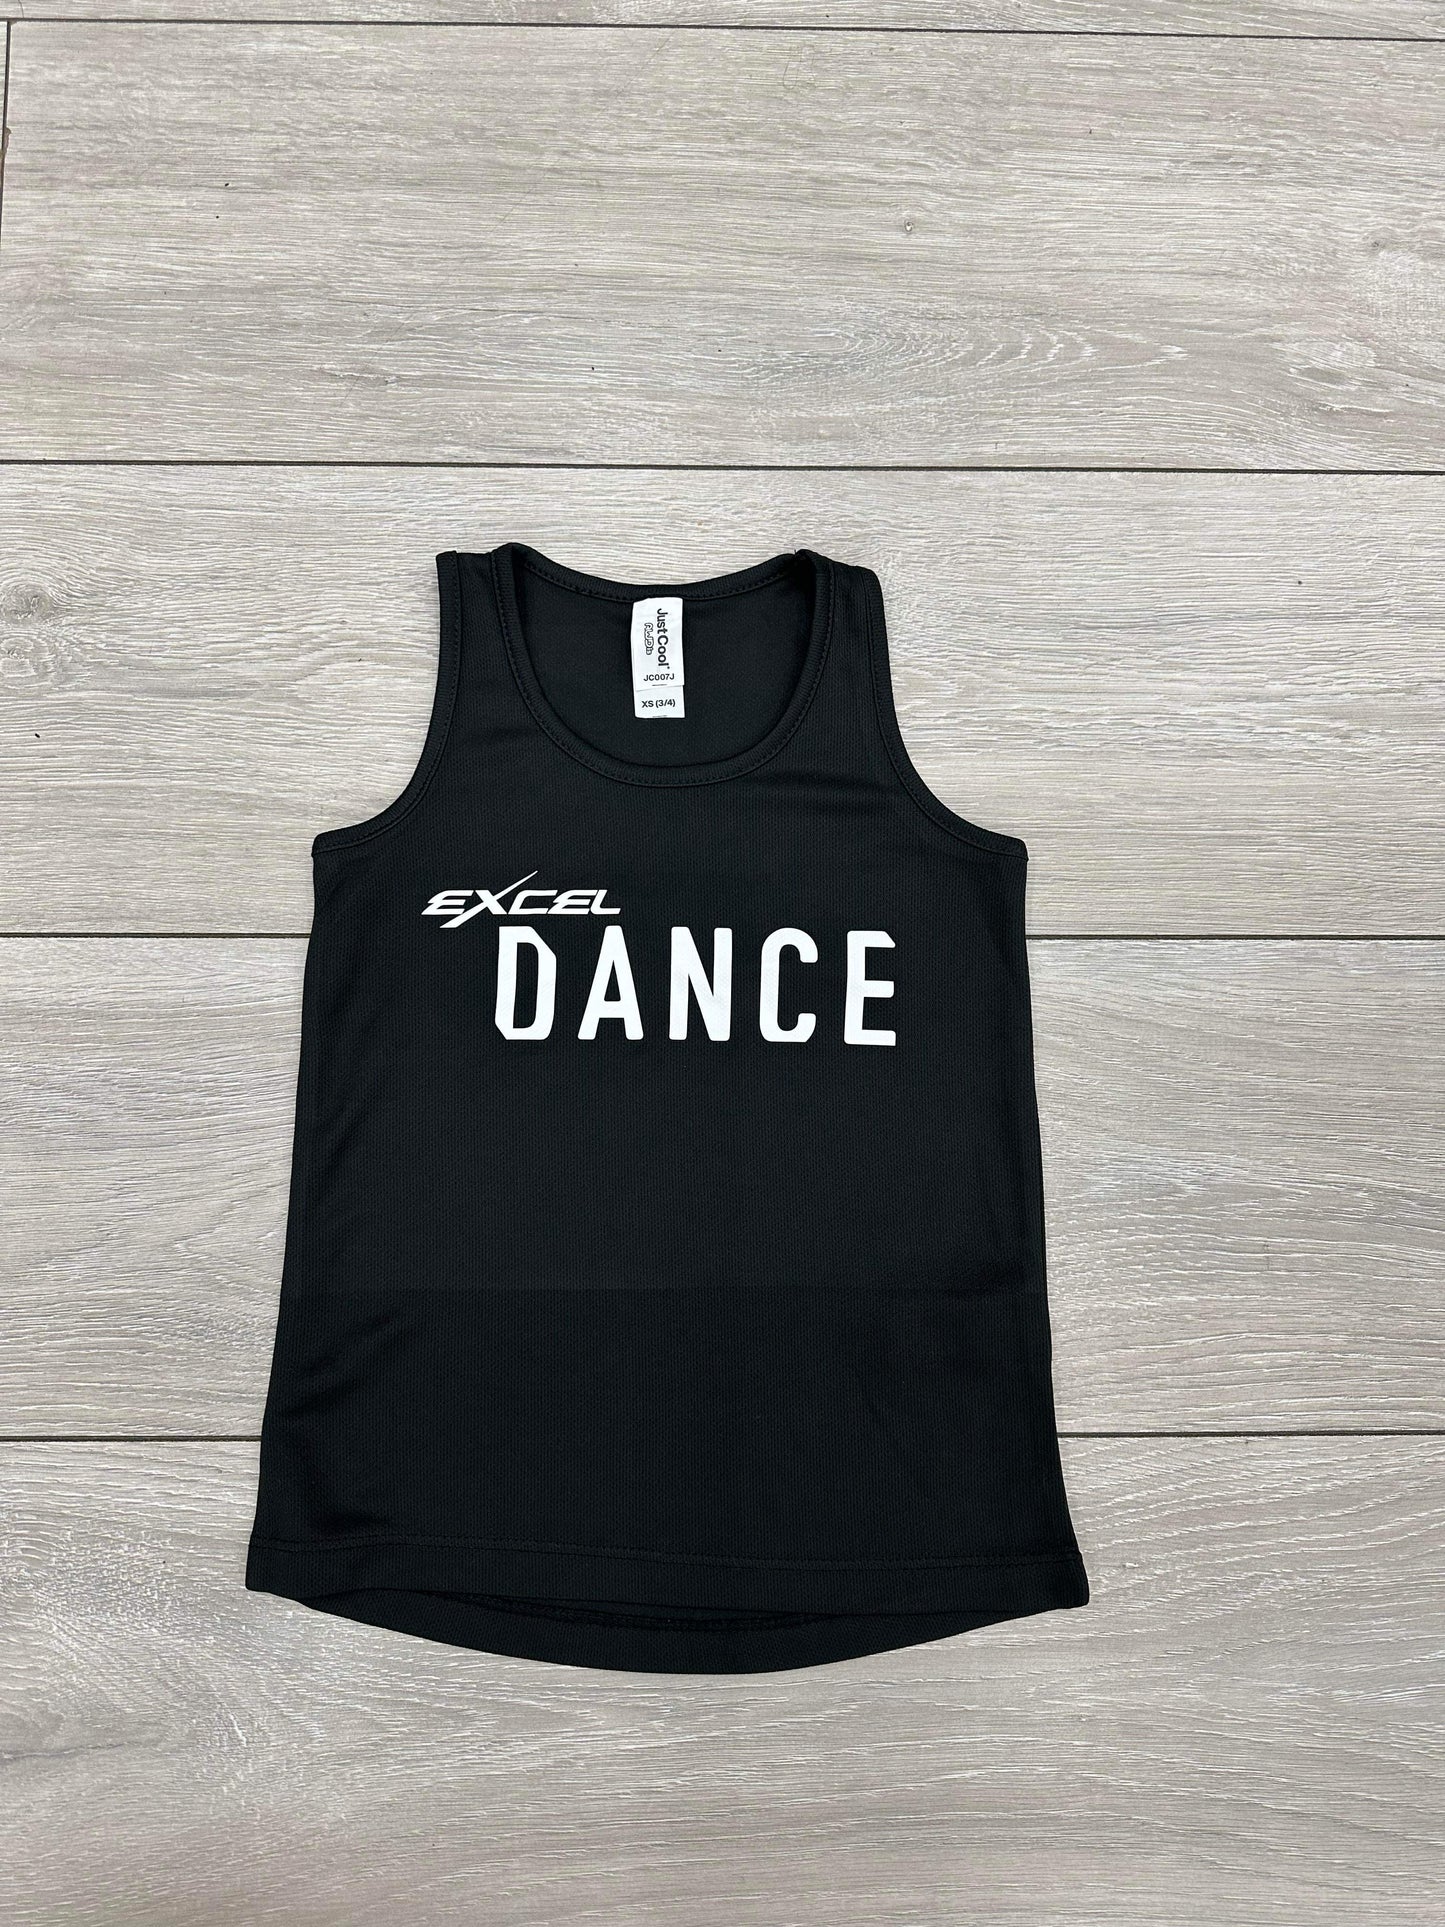 Excel Dance - Climacool Vest